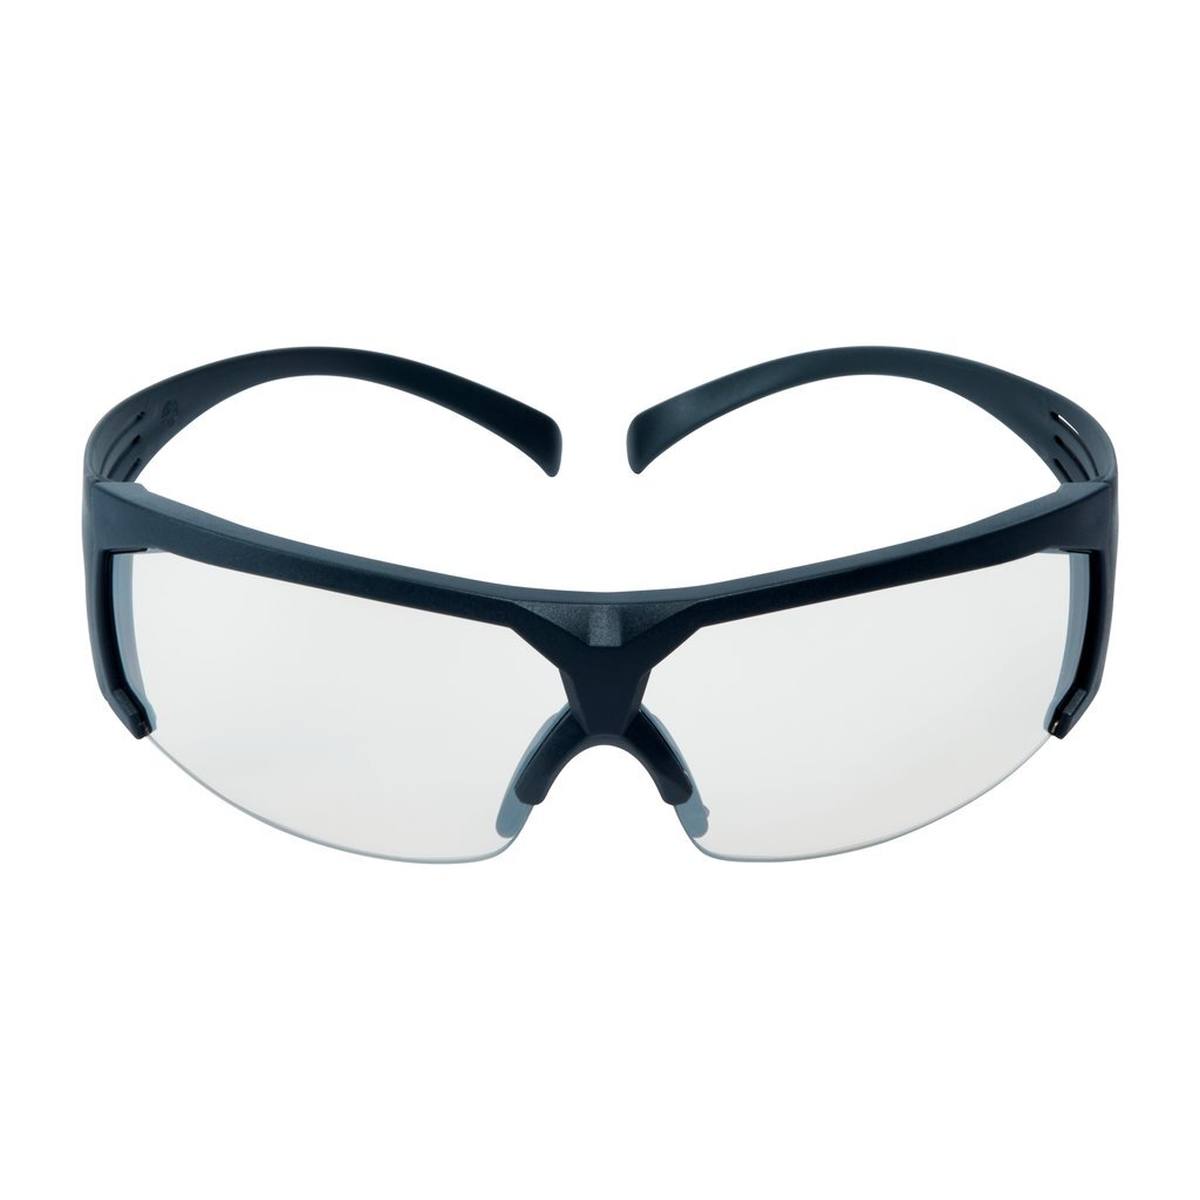 3M SecureFit 600 Schutzbrille, graue Bügel, Scotchgard Anti-Fog-/Antikratz-Beschichtung (K&N), transparente Scheibe, SF601SGAF-EU